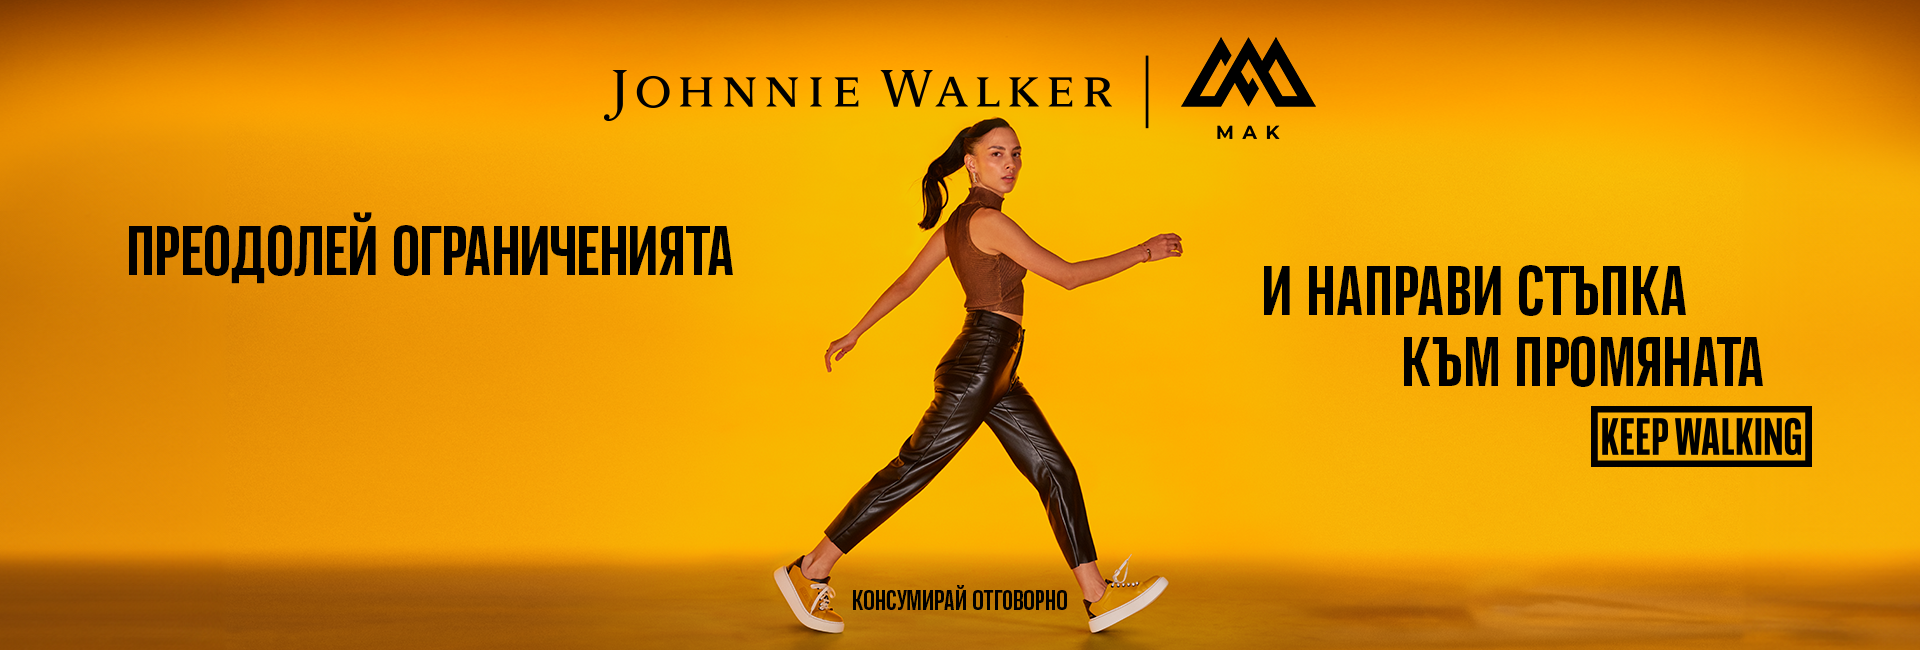 Johnnie Walker x MAK